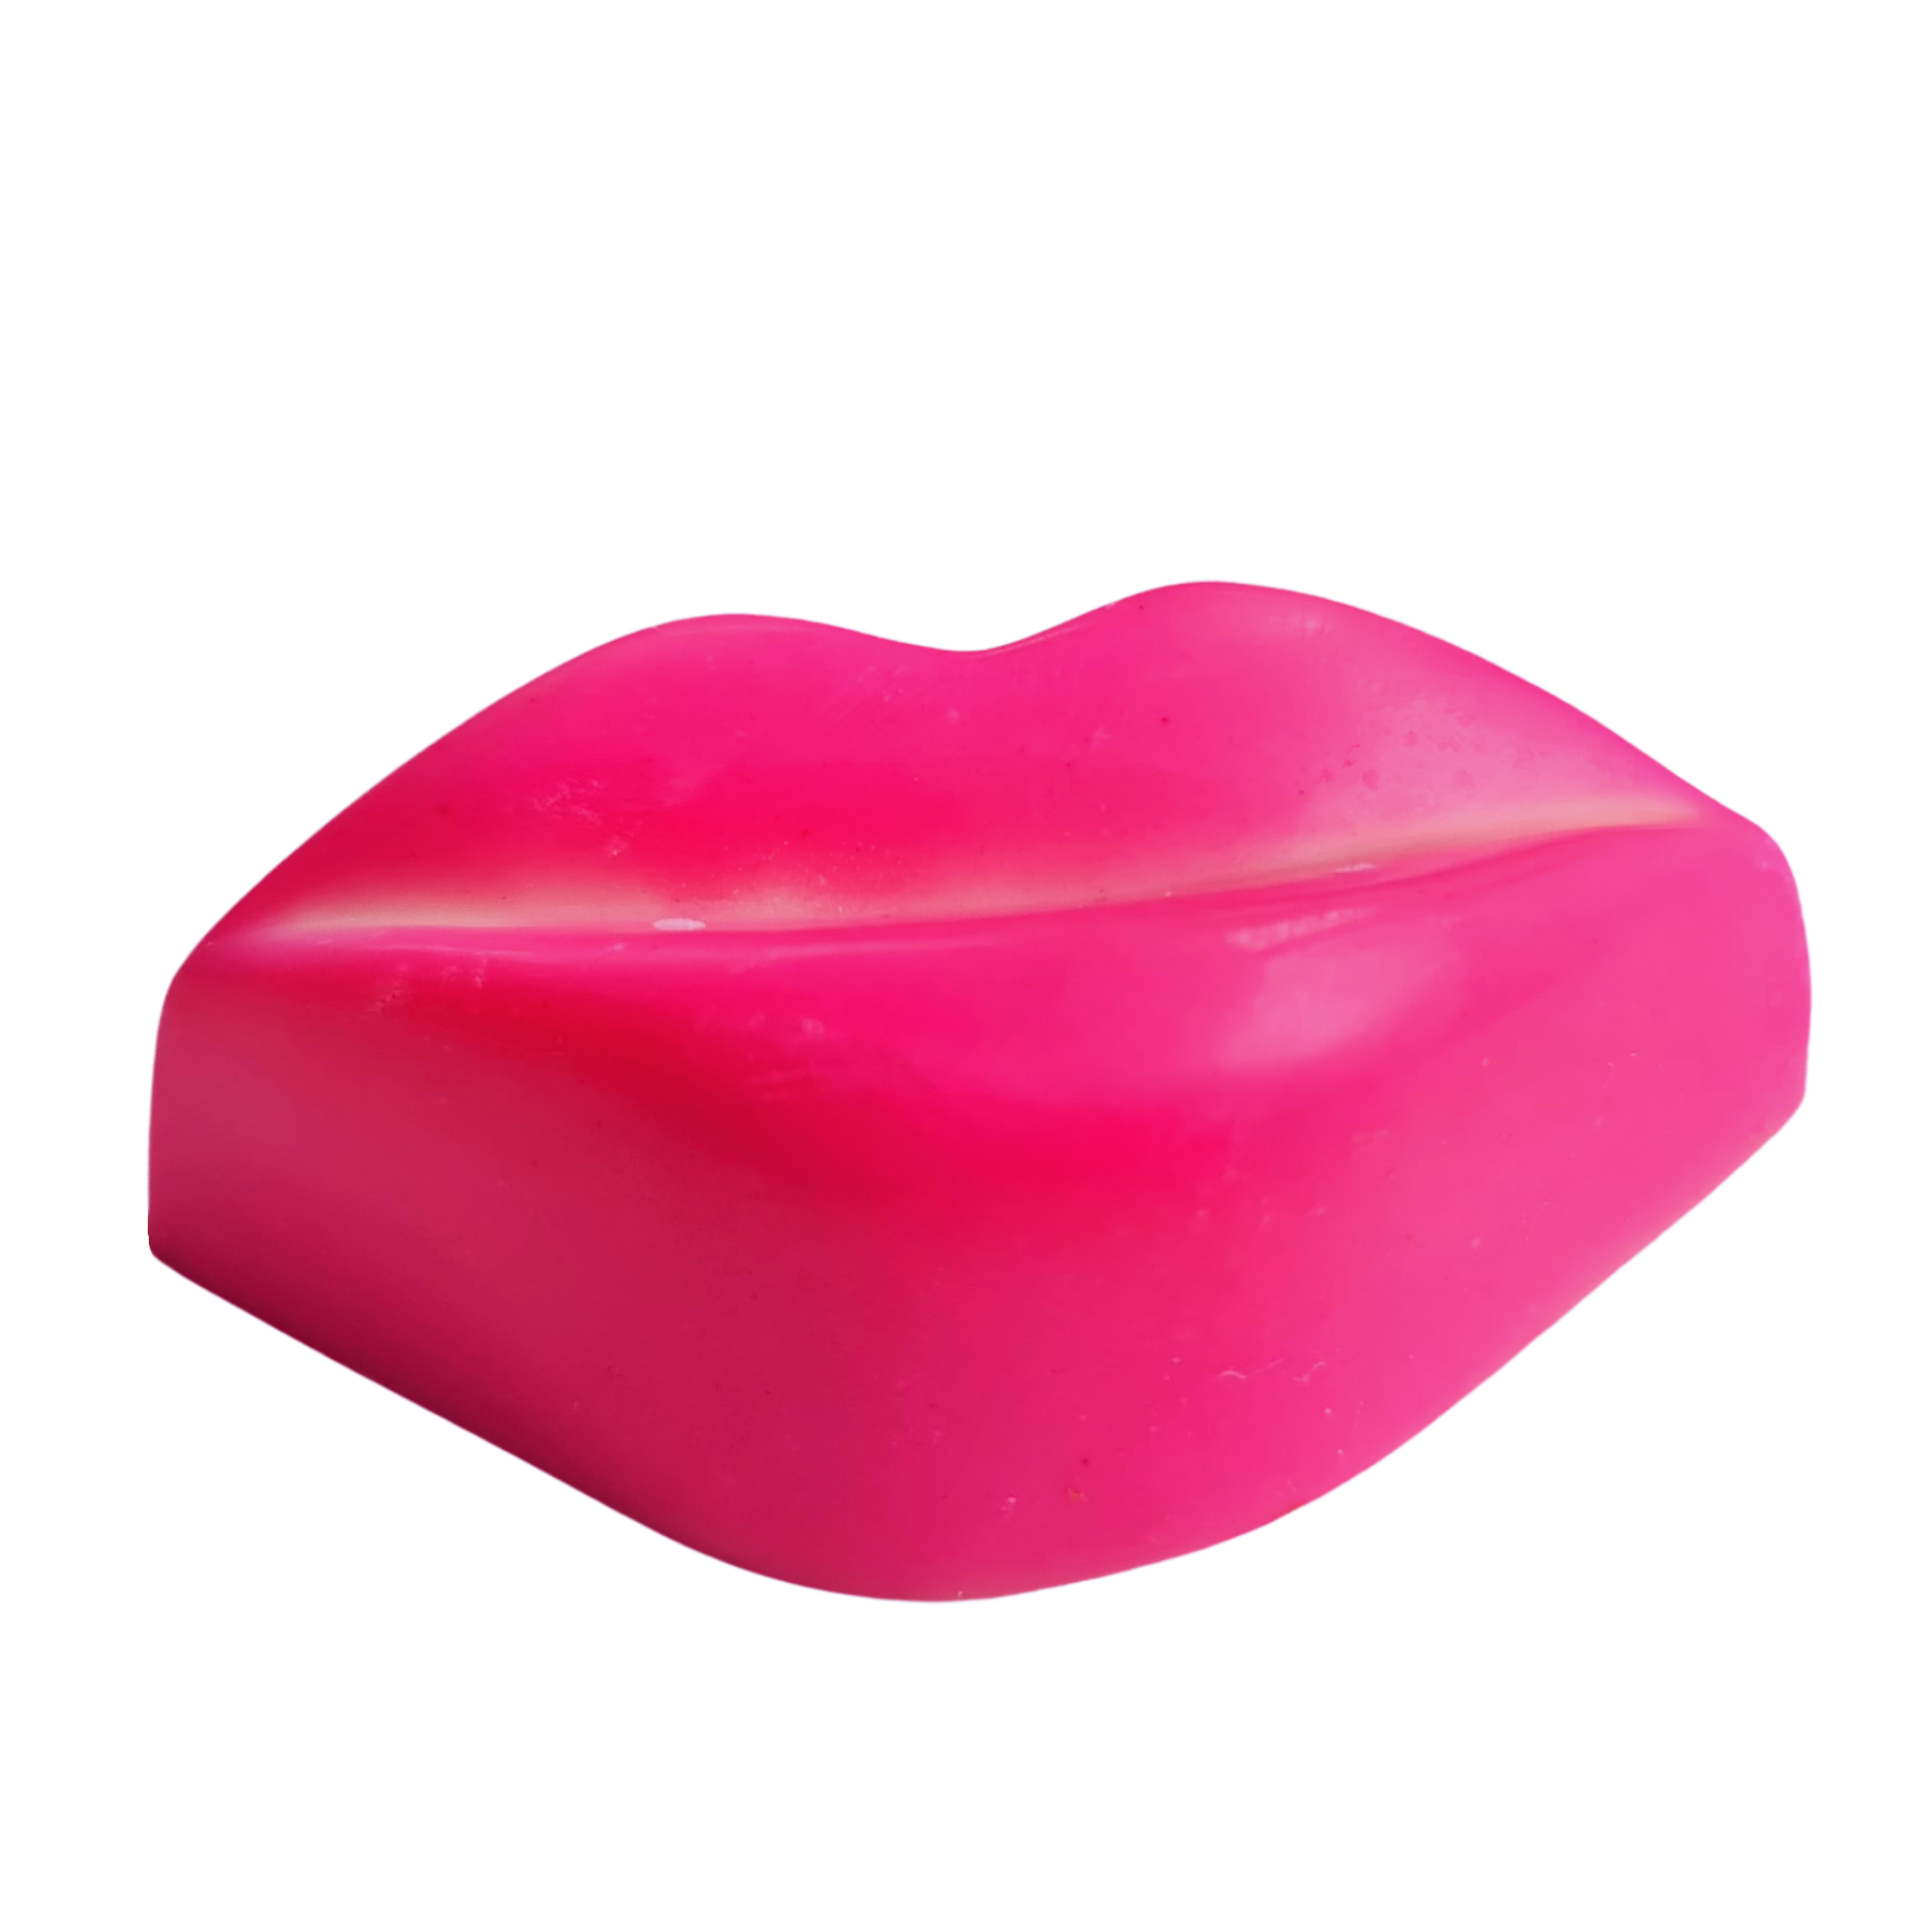 Pink Lips - Raspberry Kiss